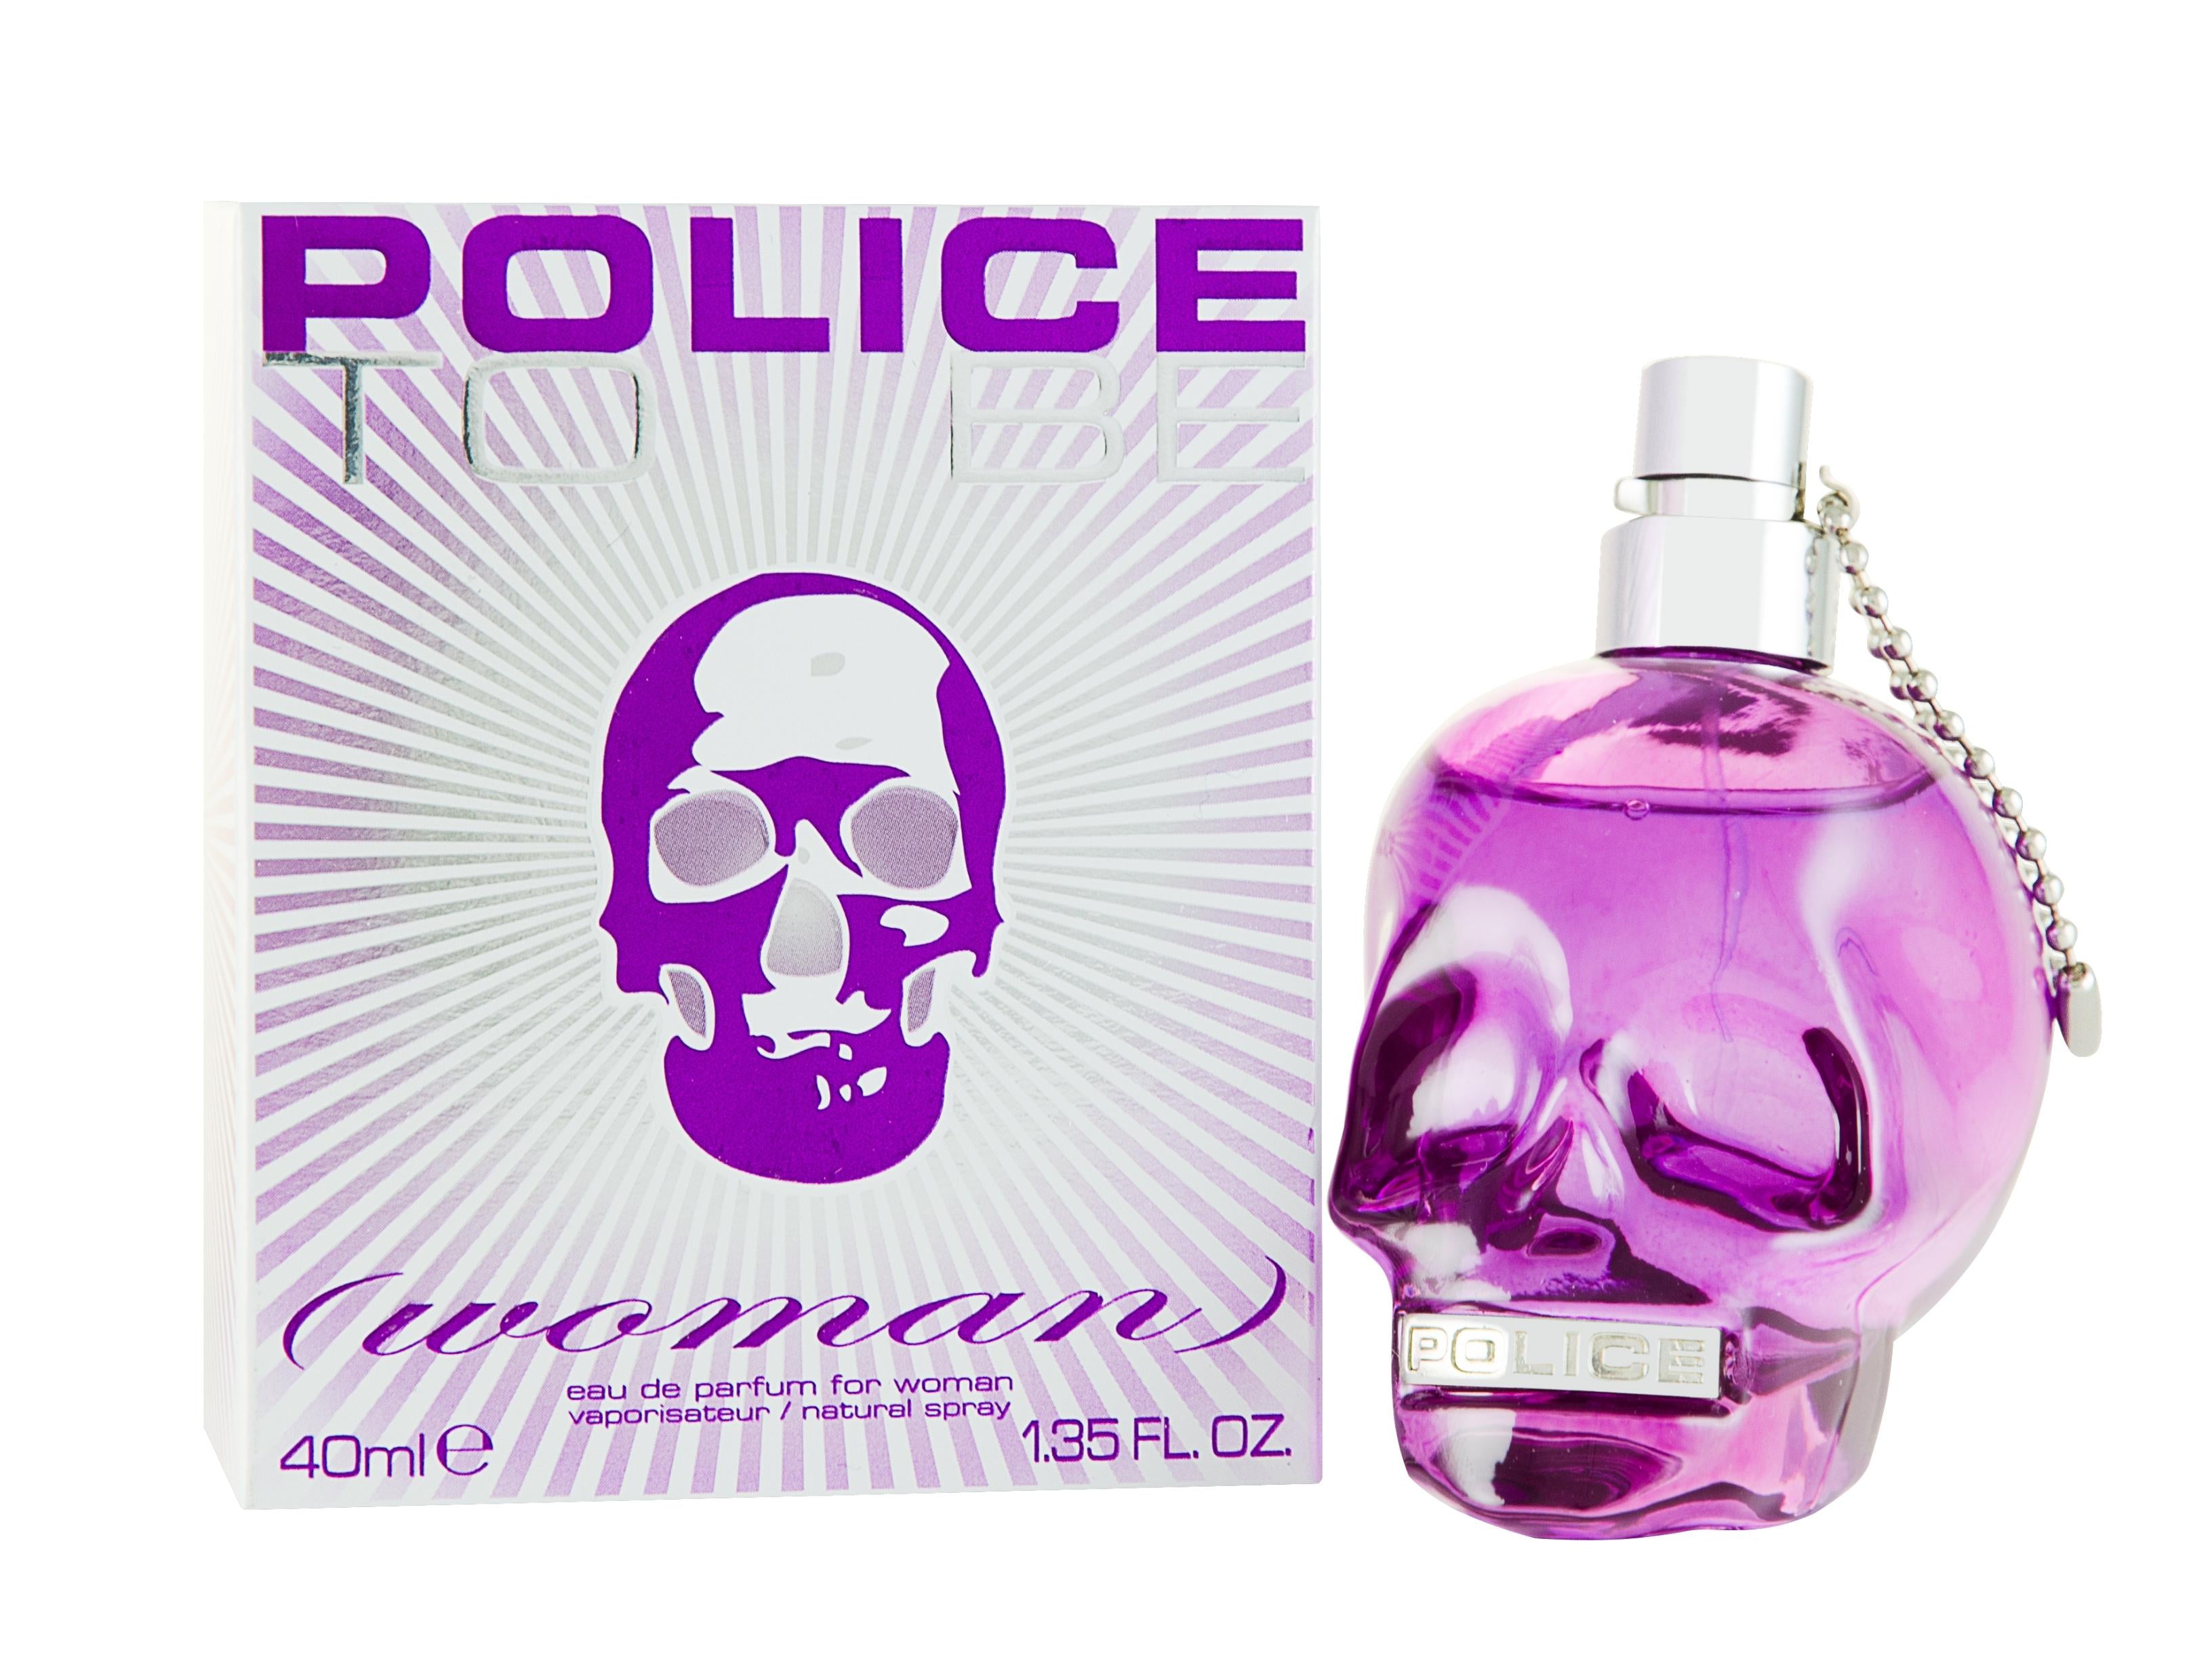 View Police To Be Woman Eau de Parfum 40ml Spray information